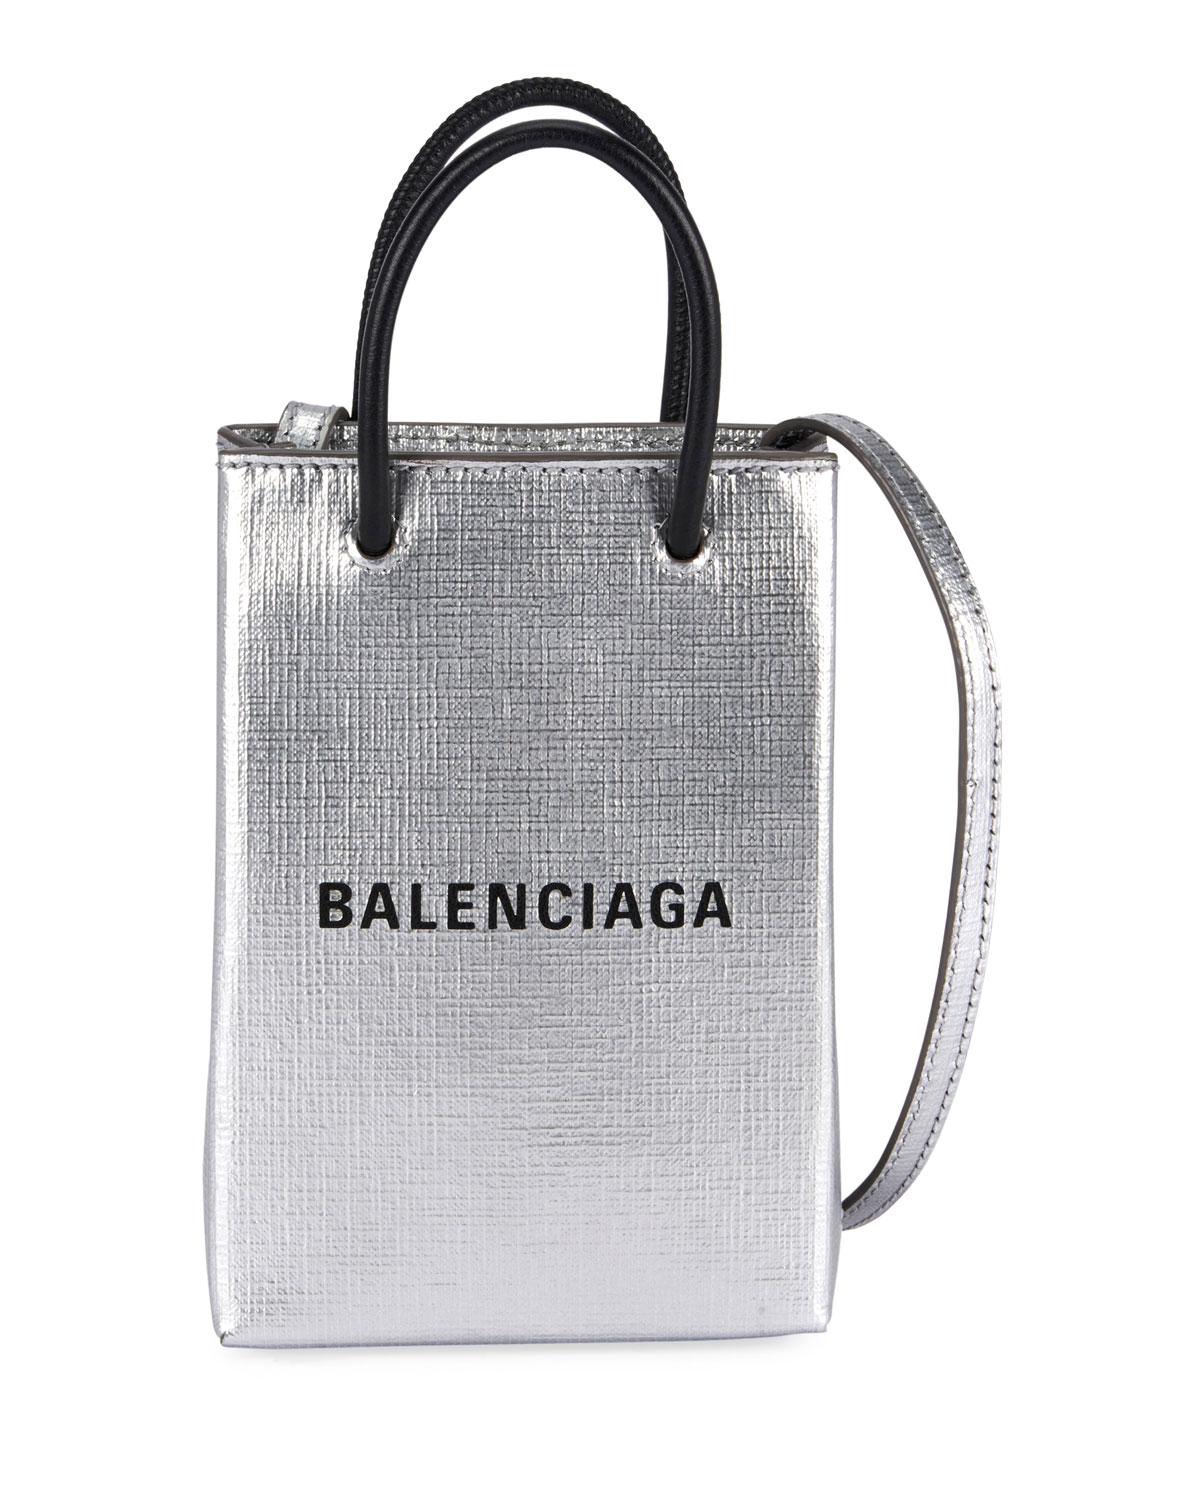 Balenciaga 2020 Mini 'Miami' Phone Shopping Bag - Black Crossbody